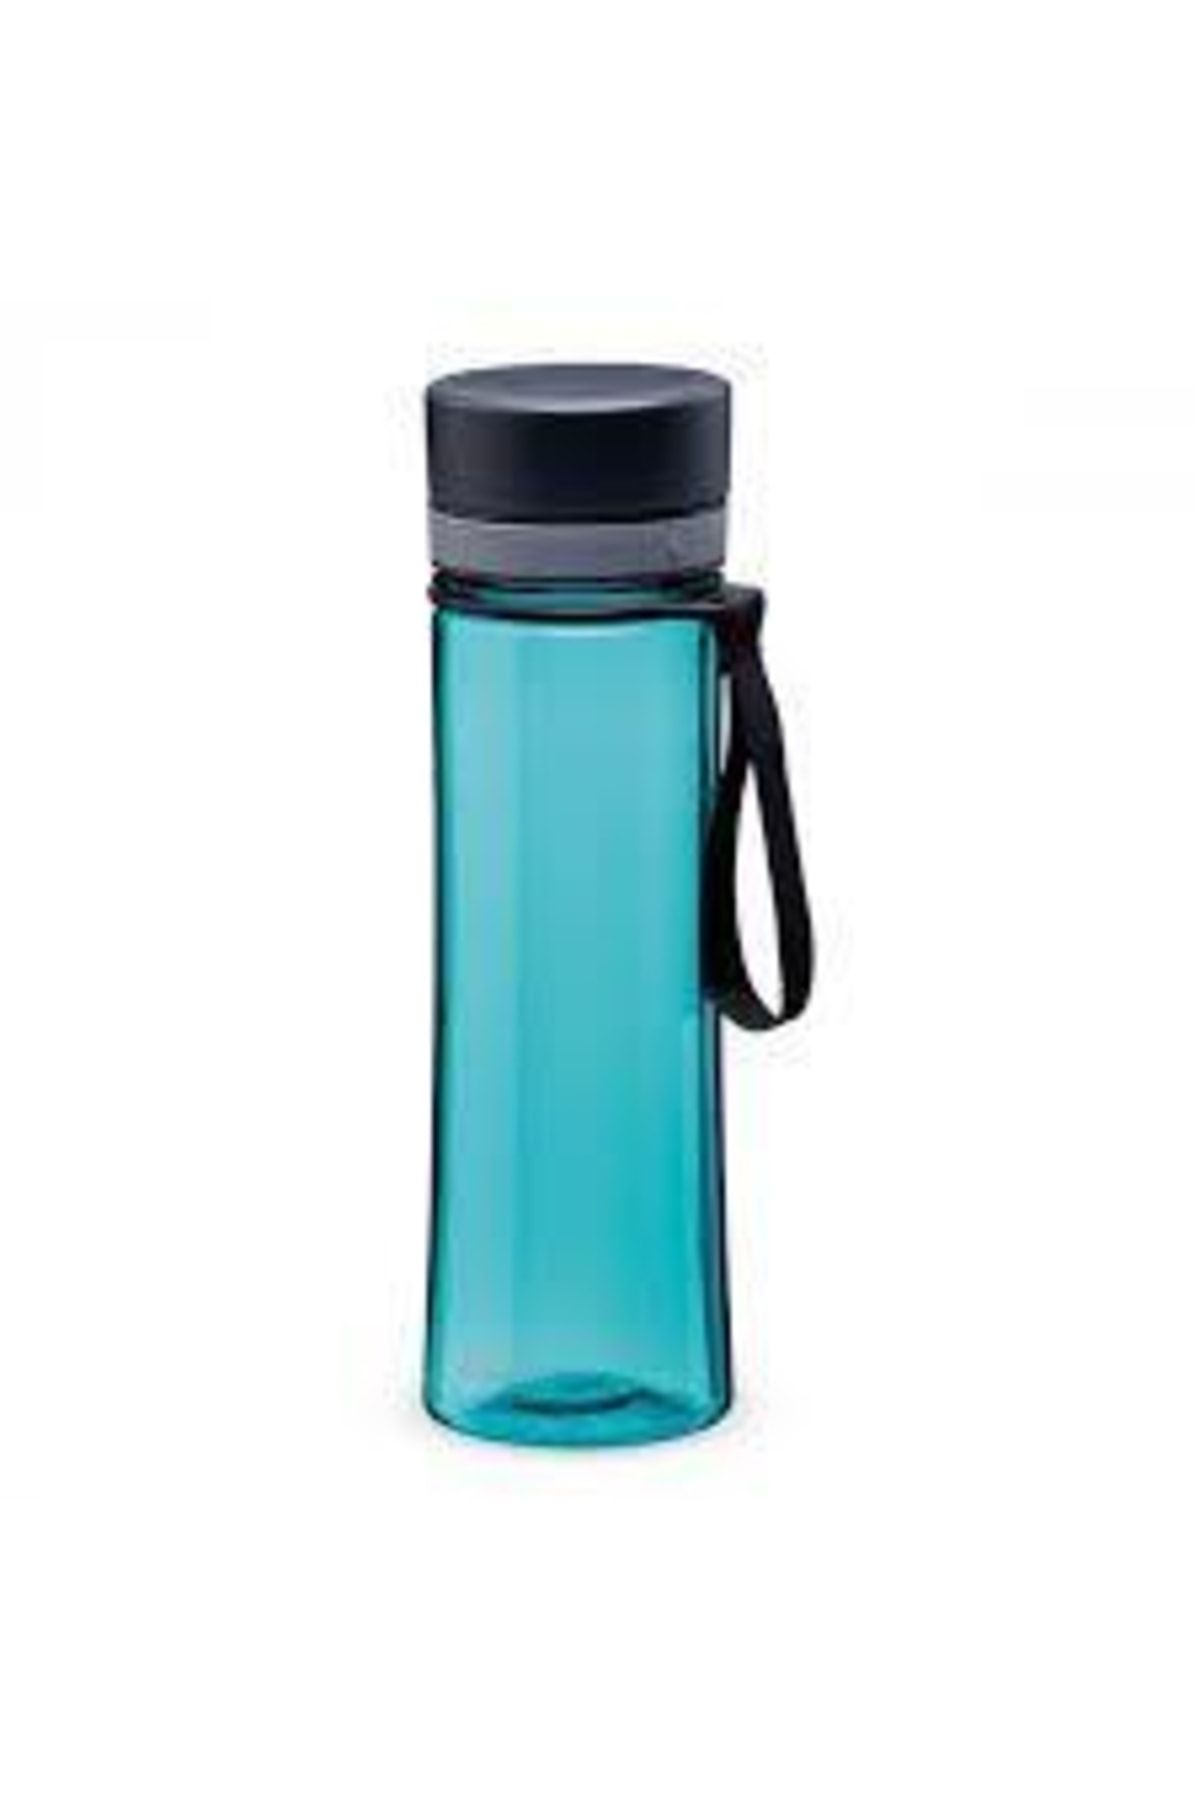 Aladdin Aveo Water Bottle 0.6l Aqua Blue